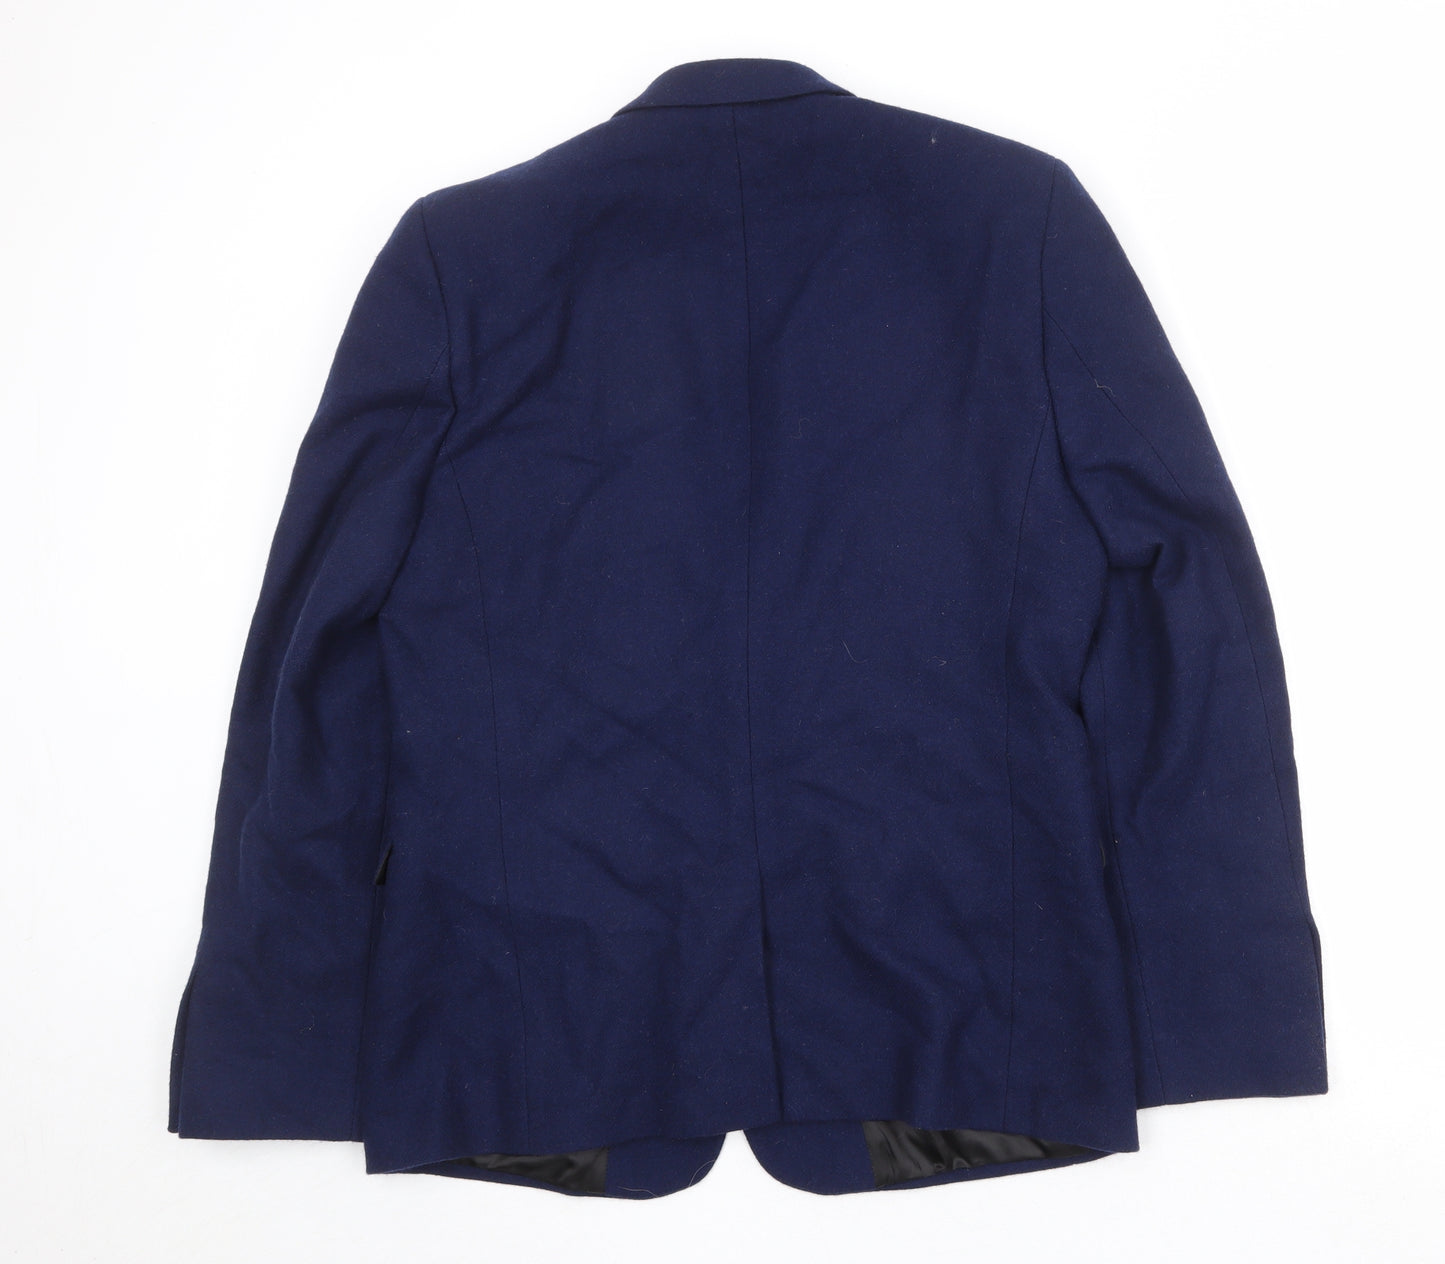 ASOS Mens Blue Wool Jacket Suit Jacket Size 42 Regular